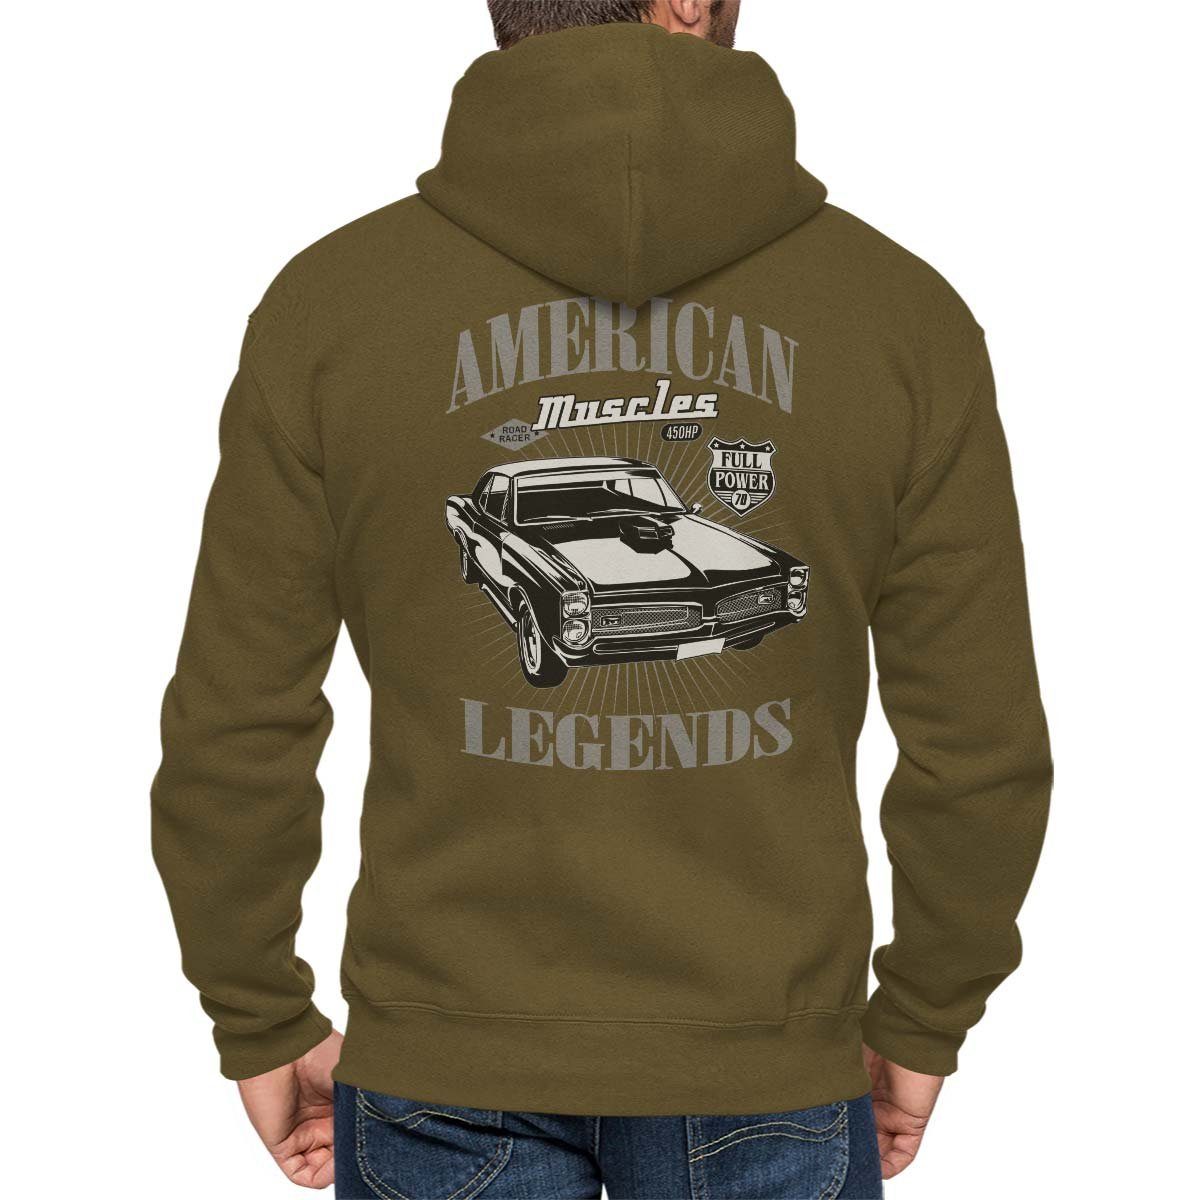 Rebel On Wheels Kapuzensweatjacke Kapuzenjacke Zip Hoodie American V8 Legends mit Auto / US-Car Motiv Khaki